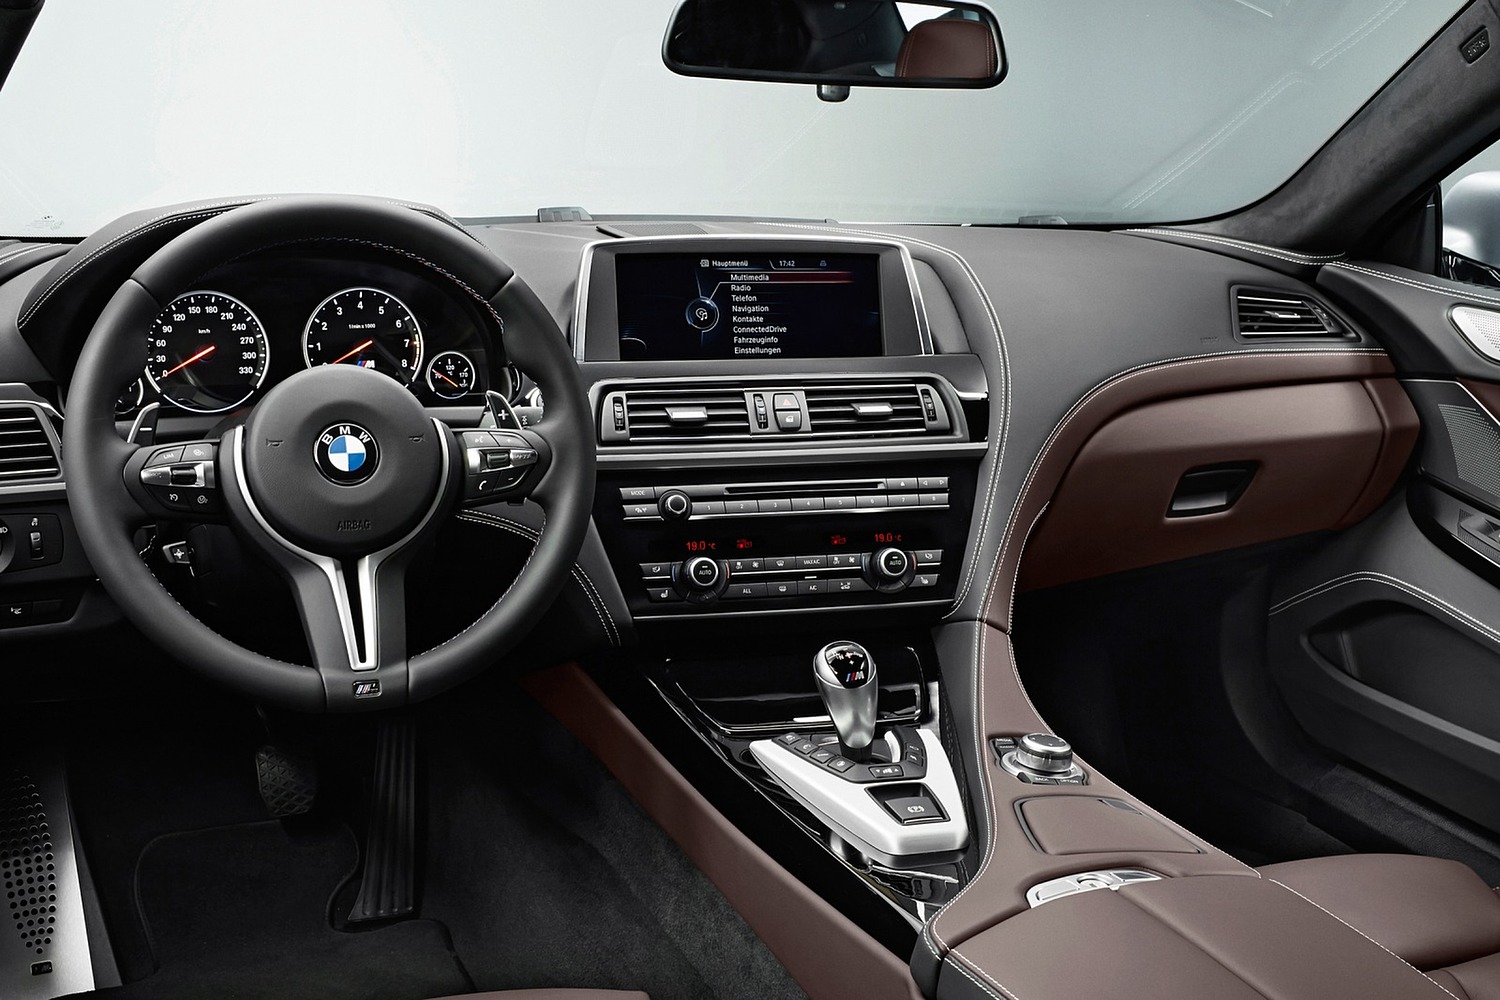 BMW M6 Gran Coupe Sedan Dashboard (2017 model year shown)